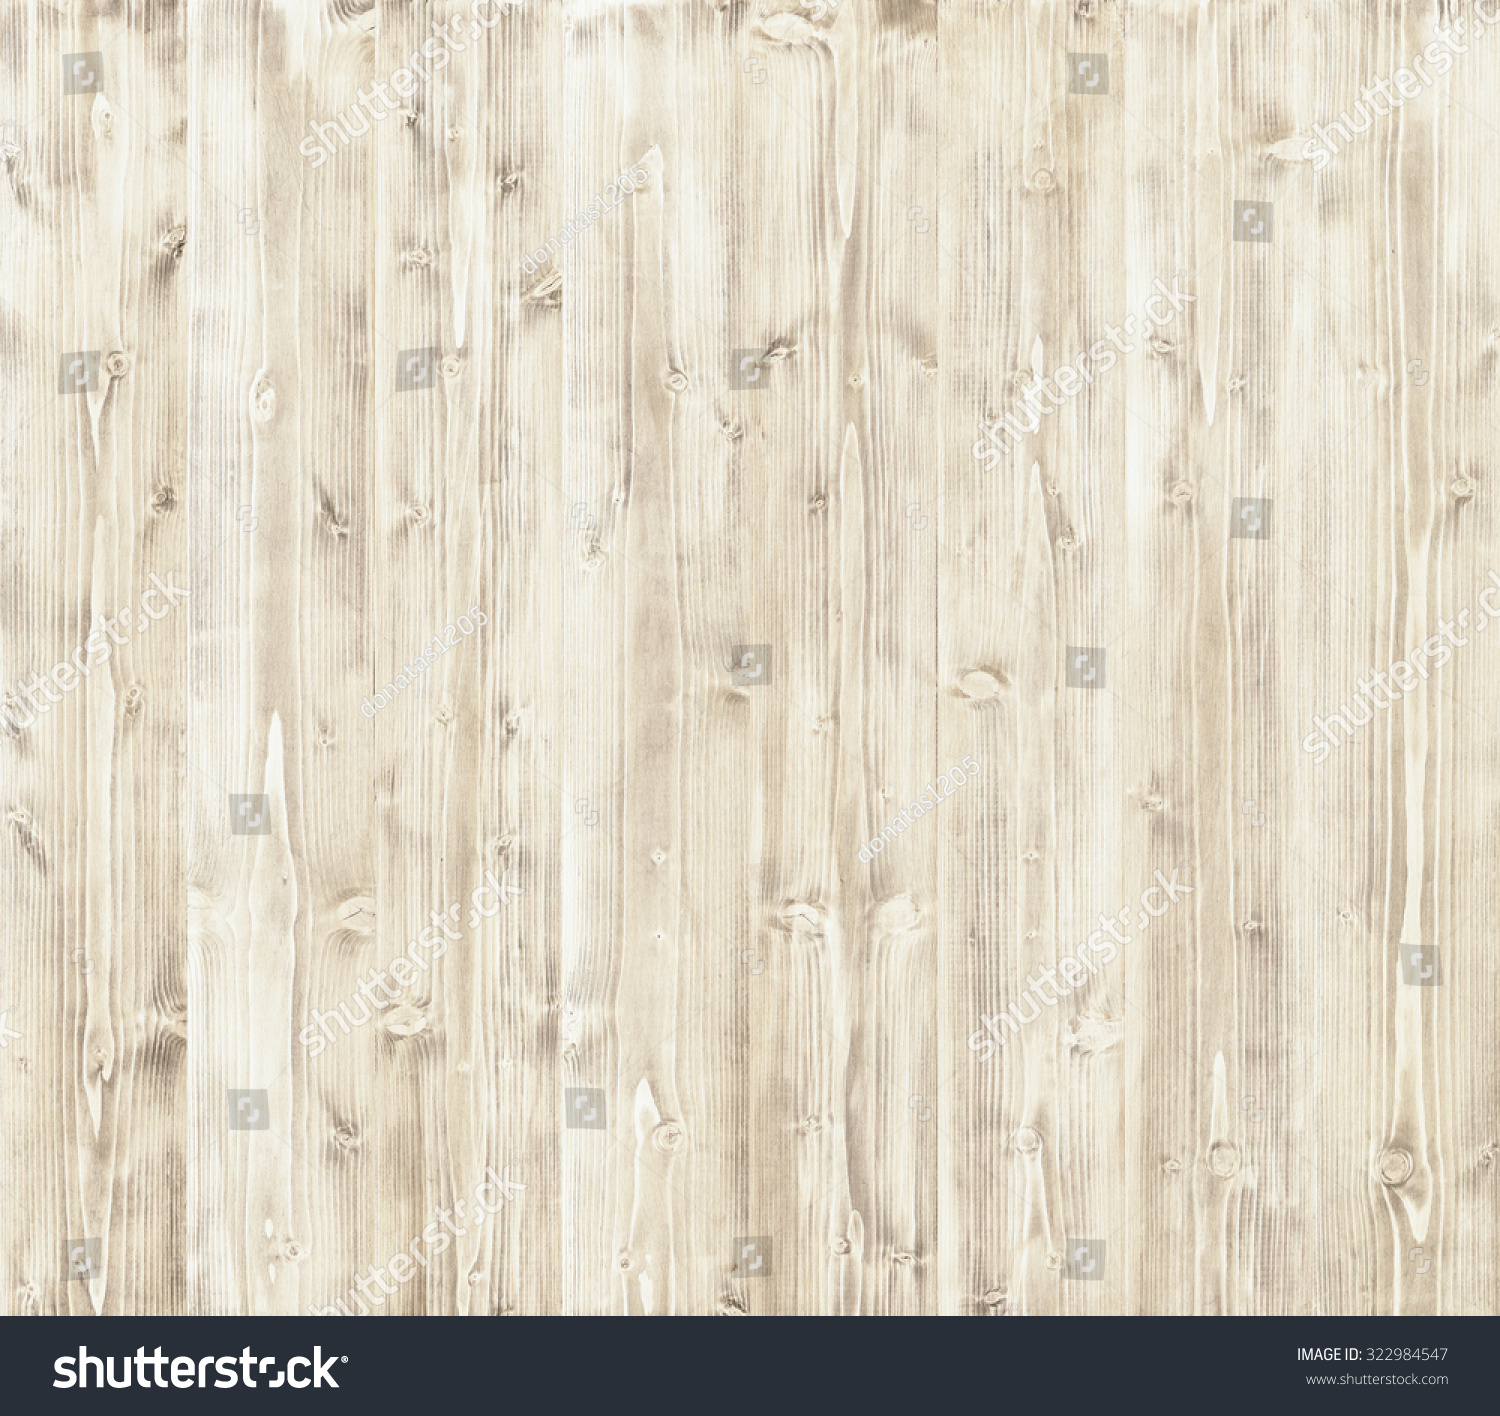 Wooden texture, light wood background #322984547